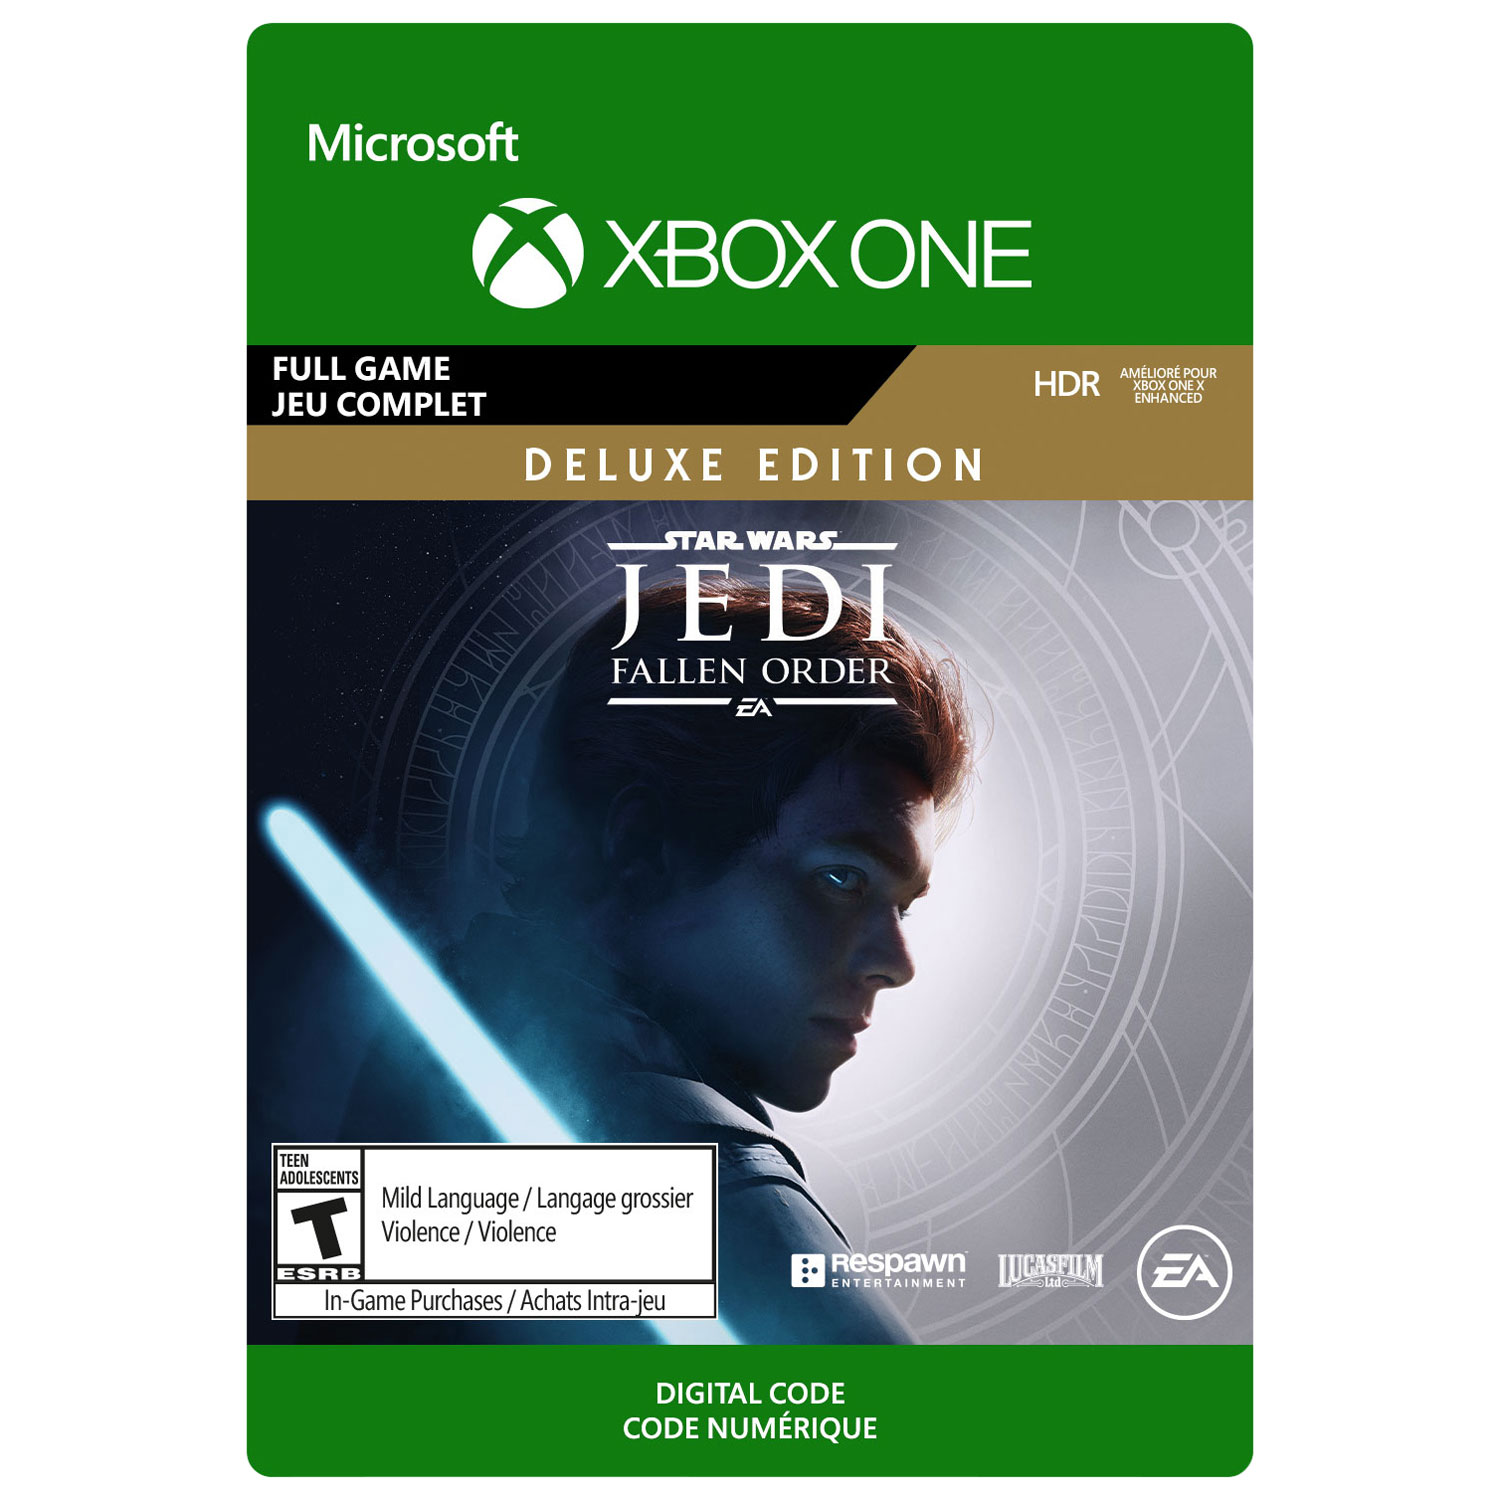 Star Wars Jedi: Fallen Order Deluxe Edition (Xbox One) - Digital Download